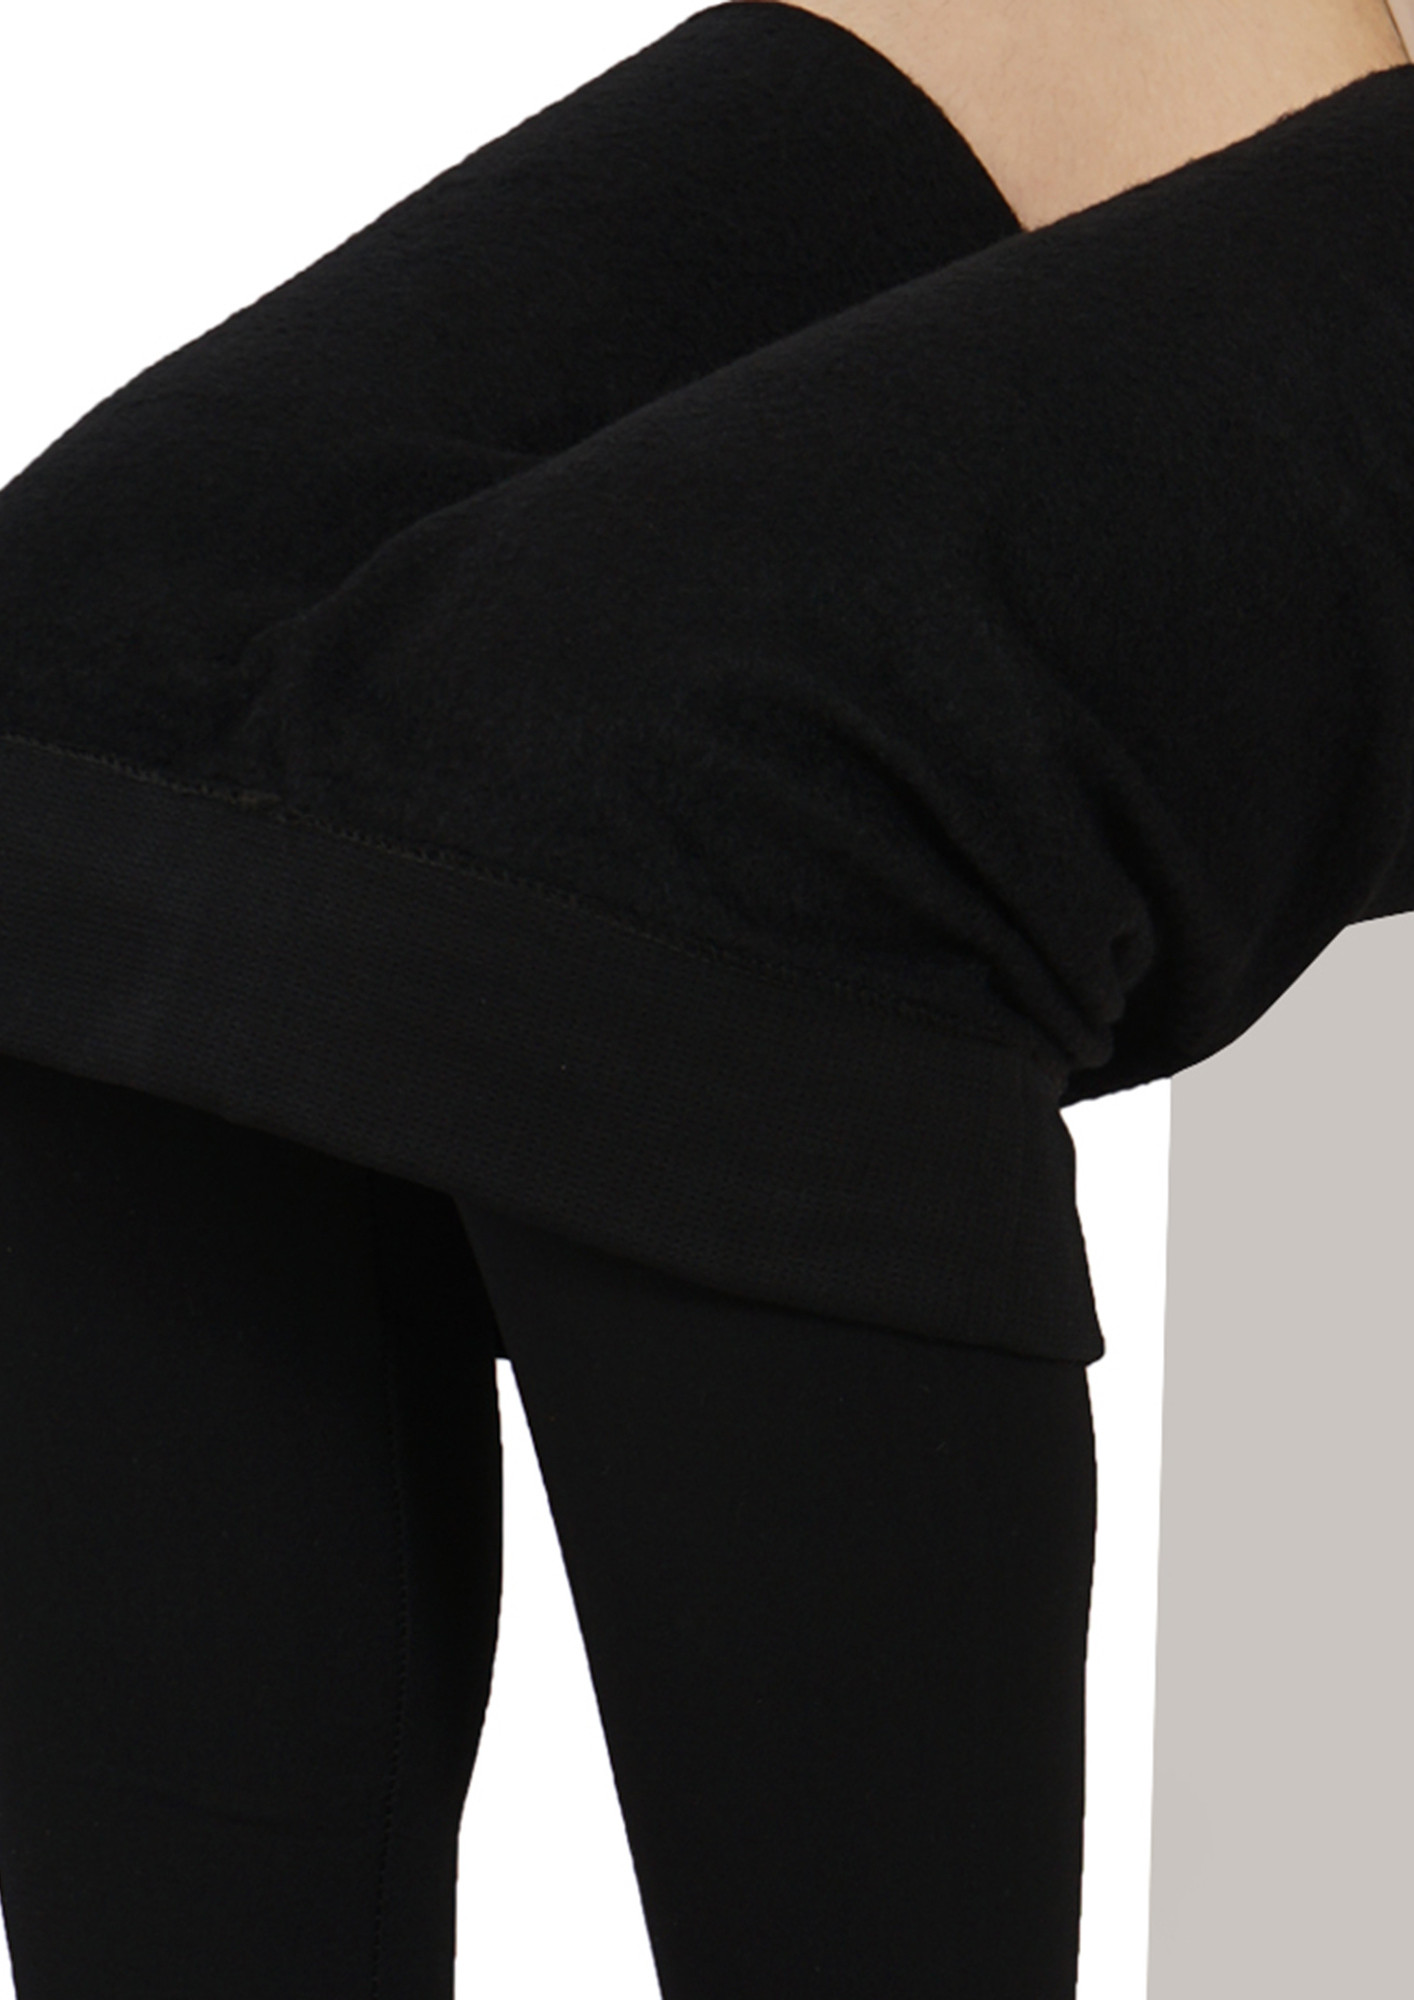 Buy NEXT2SKIN Black Women's Warm Tights Fleece Leggings for Winter